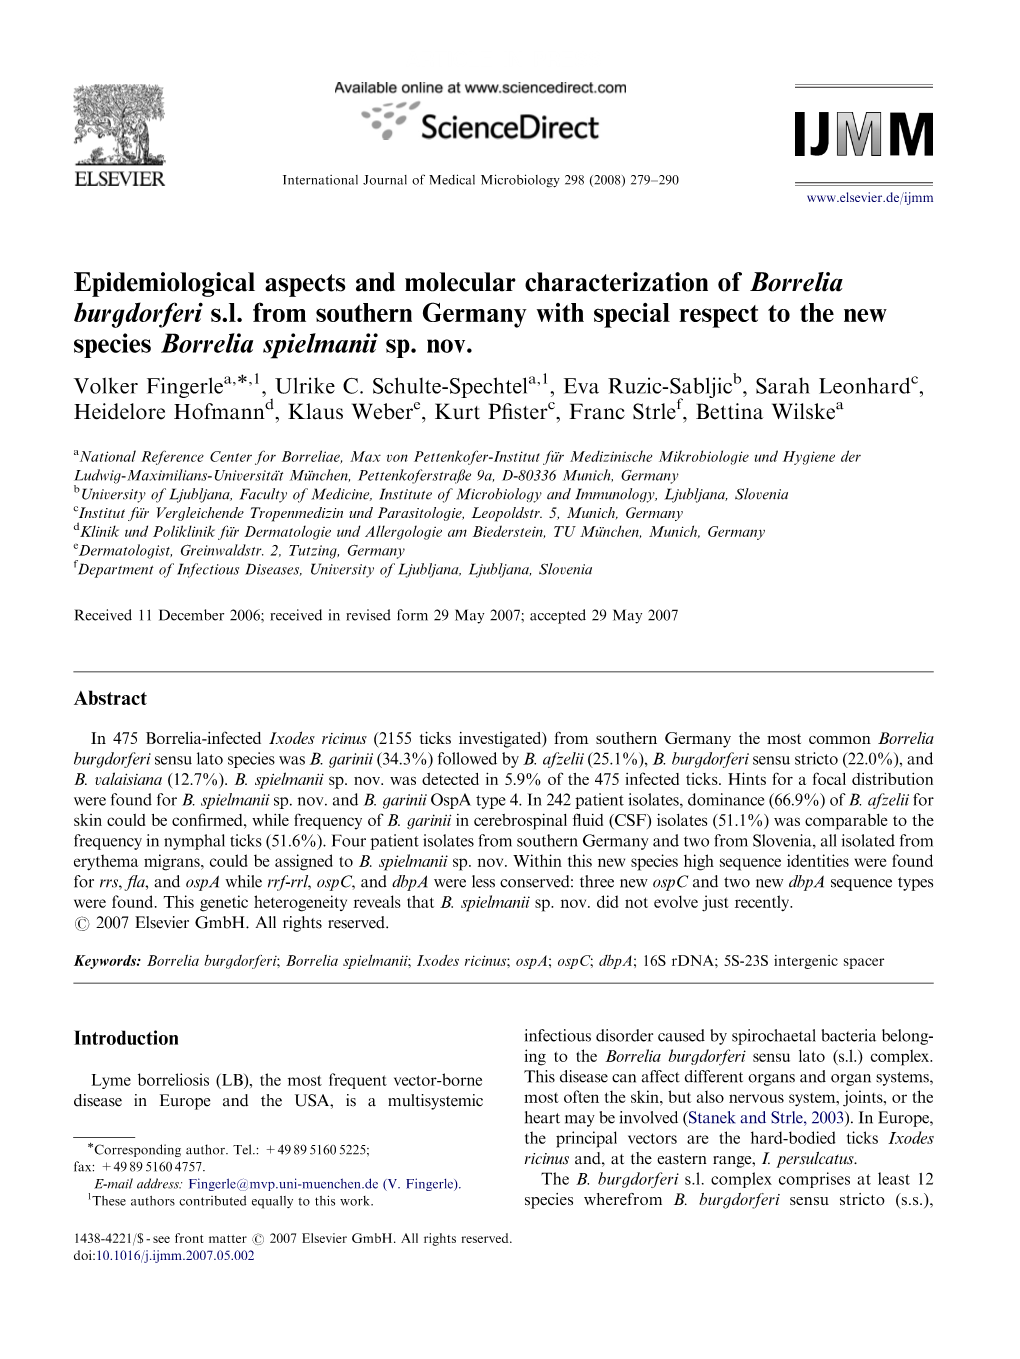 Epidemiological Aspects and Molecular Characterization of Borrelia Burgdorferi S.L